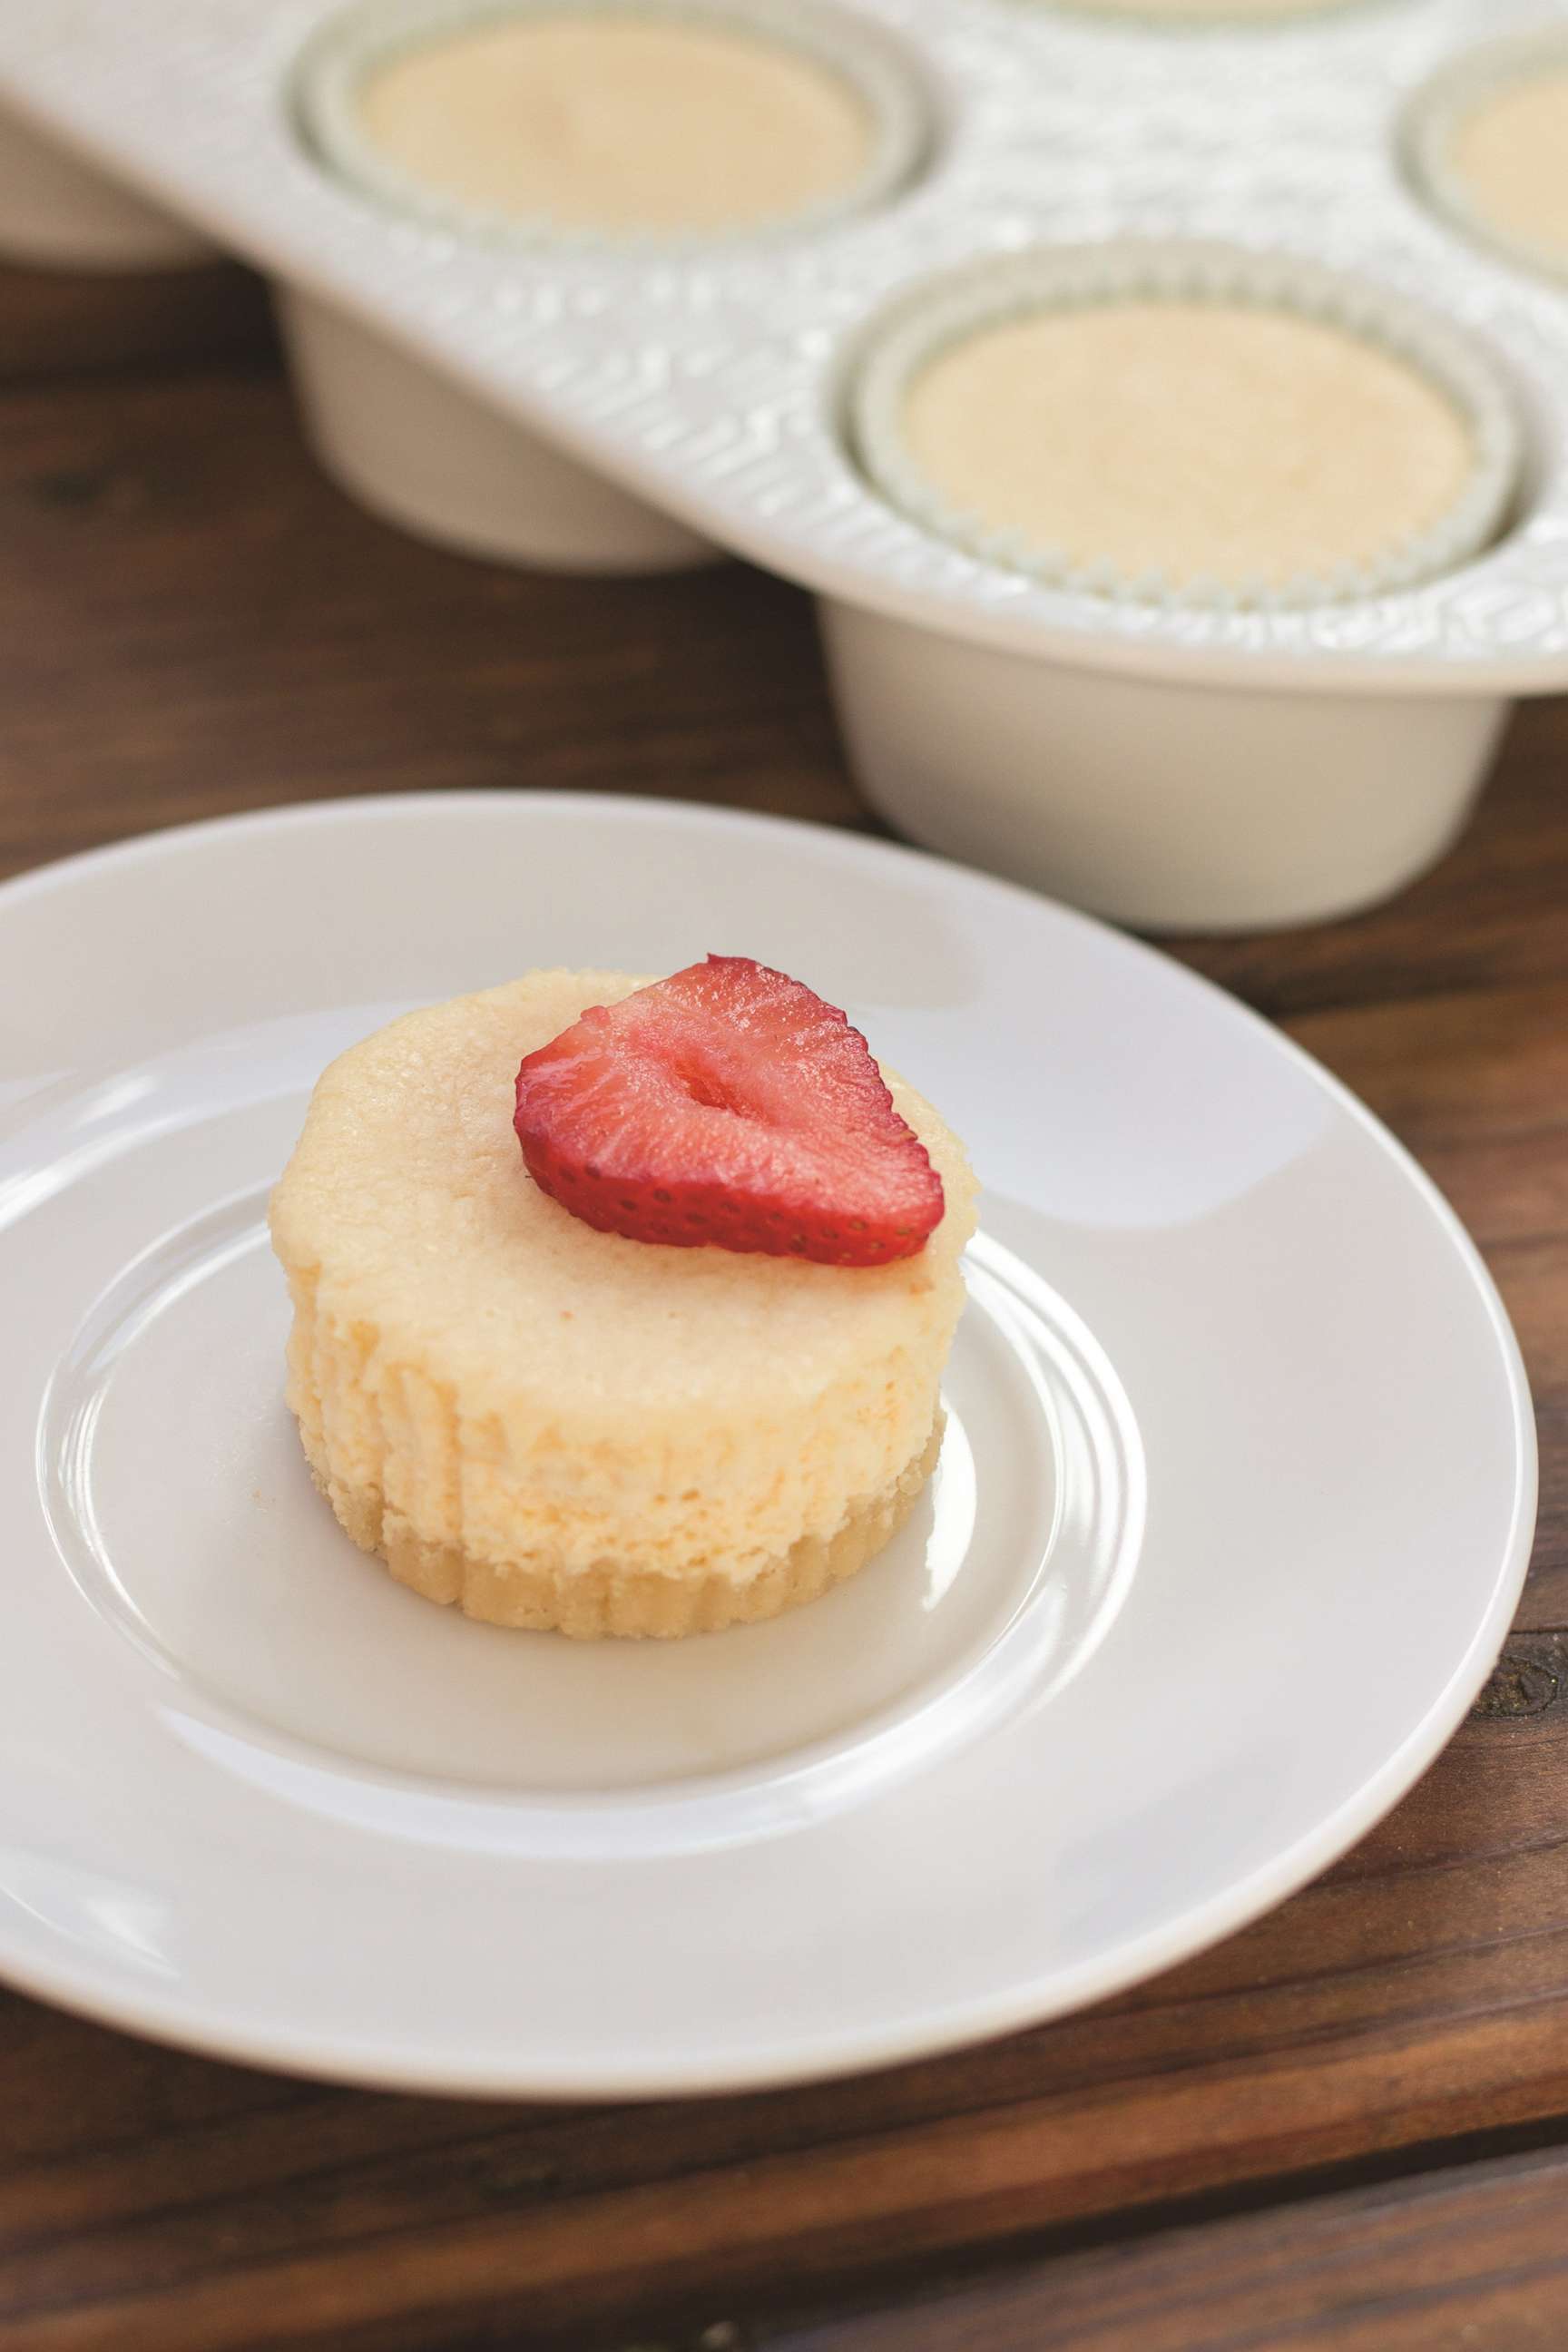 PHOTO: "Simply Keto" author Suzanne Ryan's recipe for mini cheesecakes.